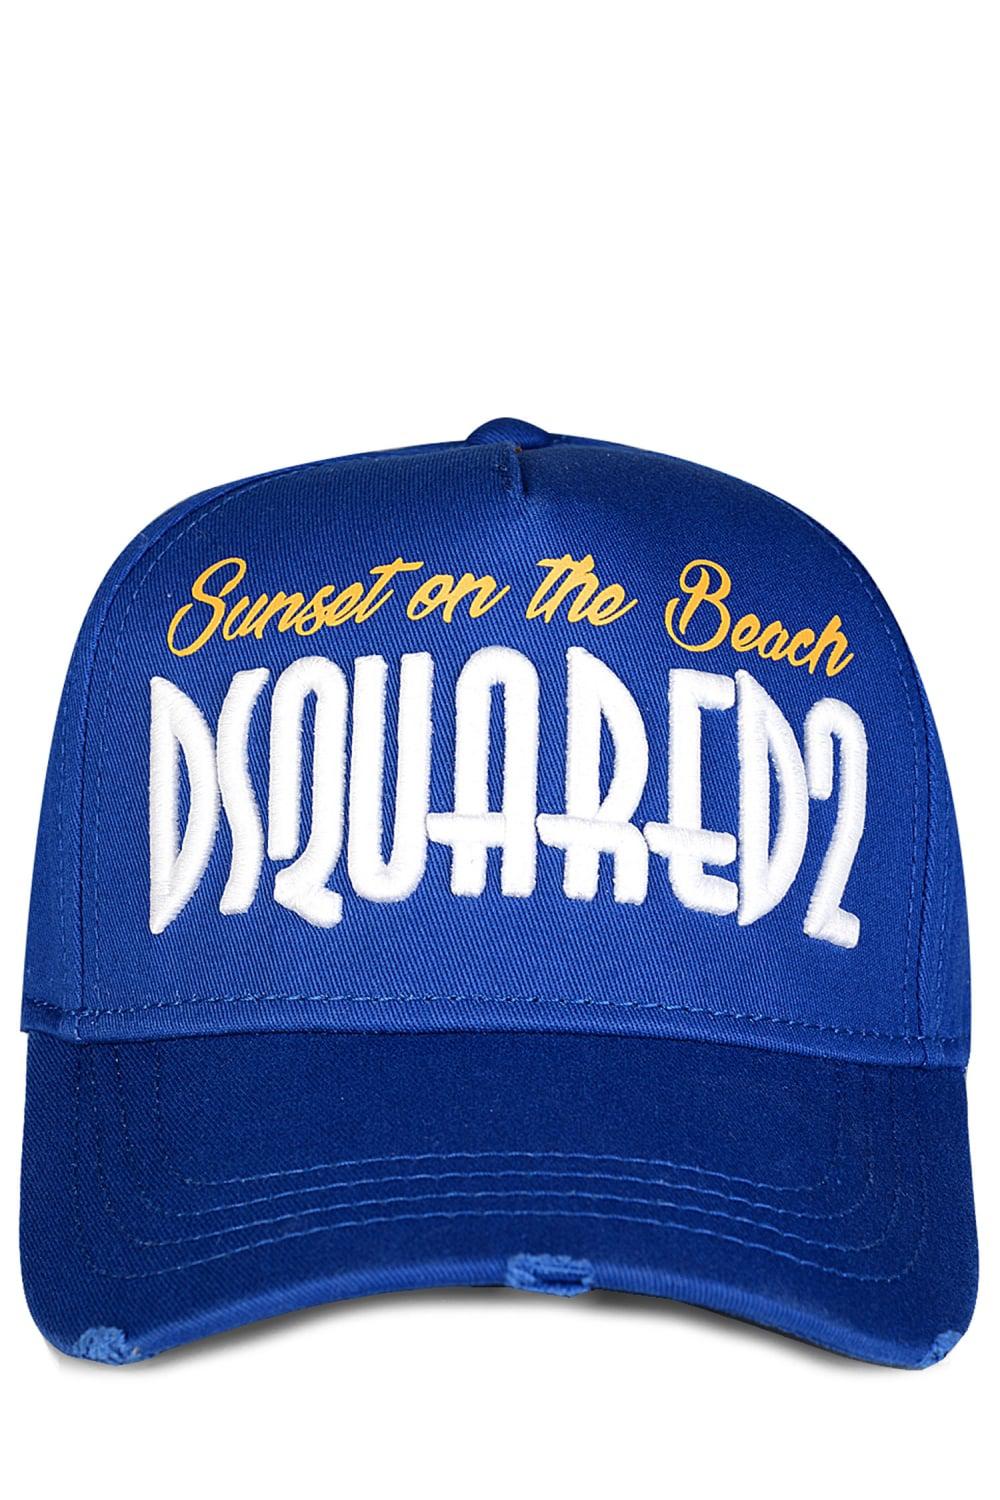 dsquared2 sunset beach cap